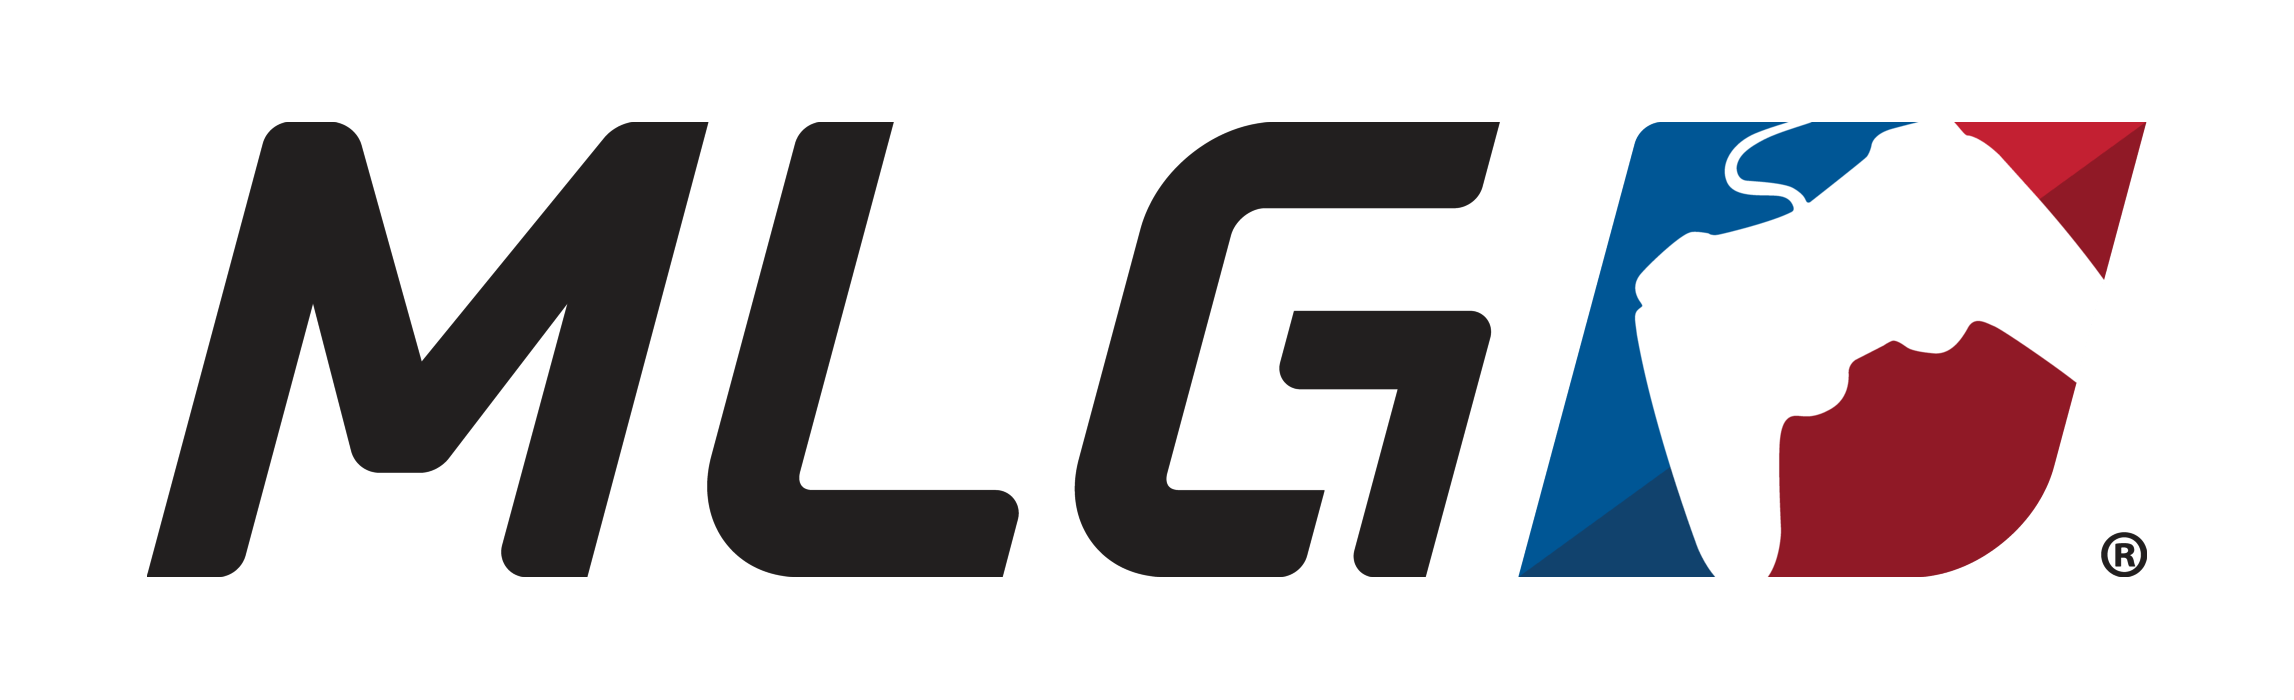 MLG Logo - MLG Logo, Major League Gaming symbol, meaning